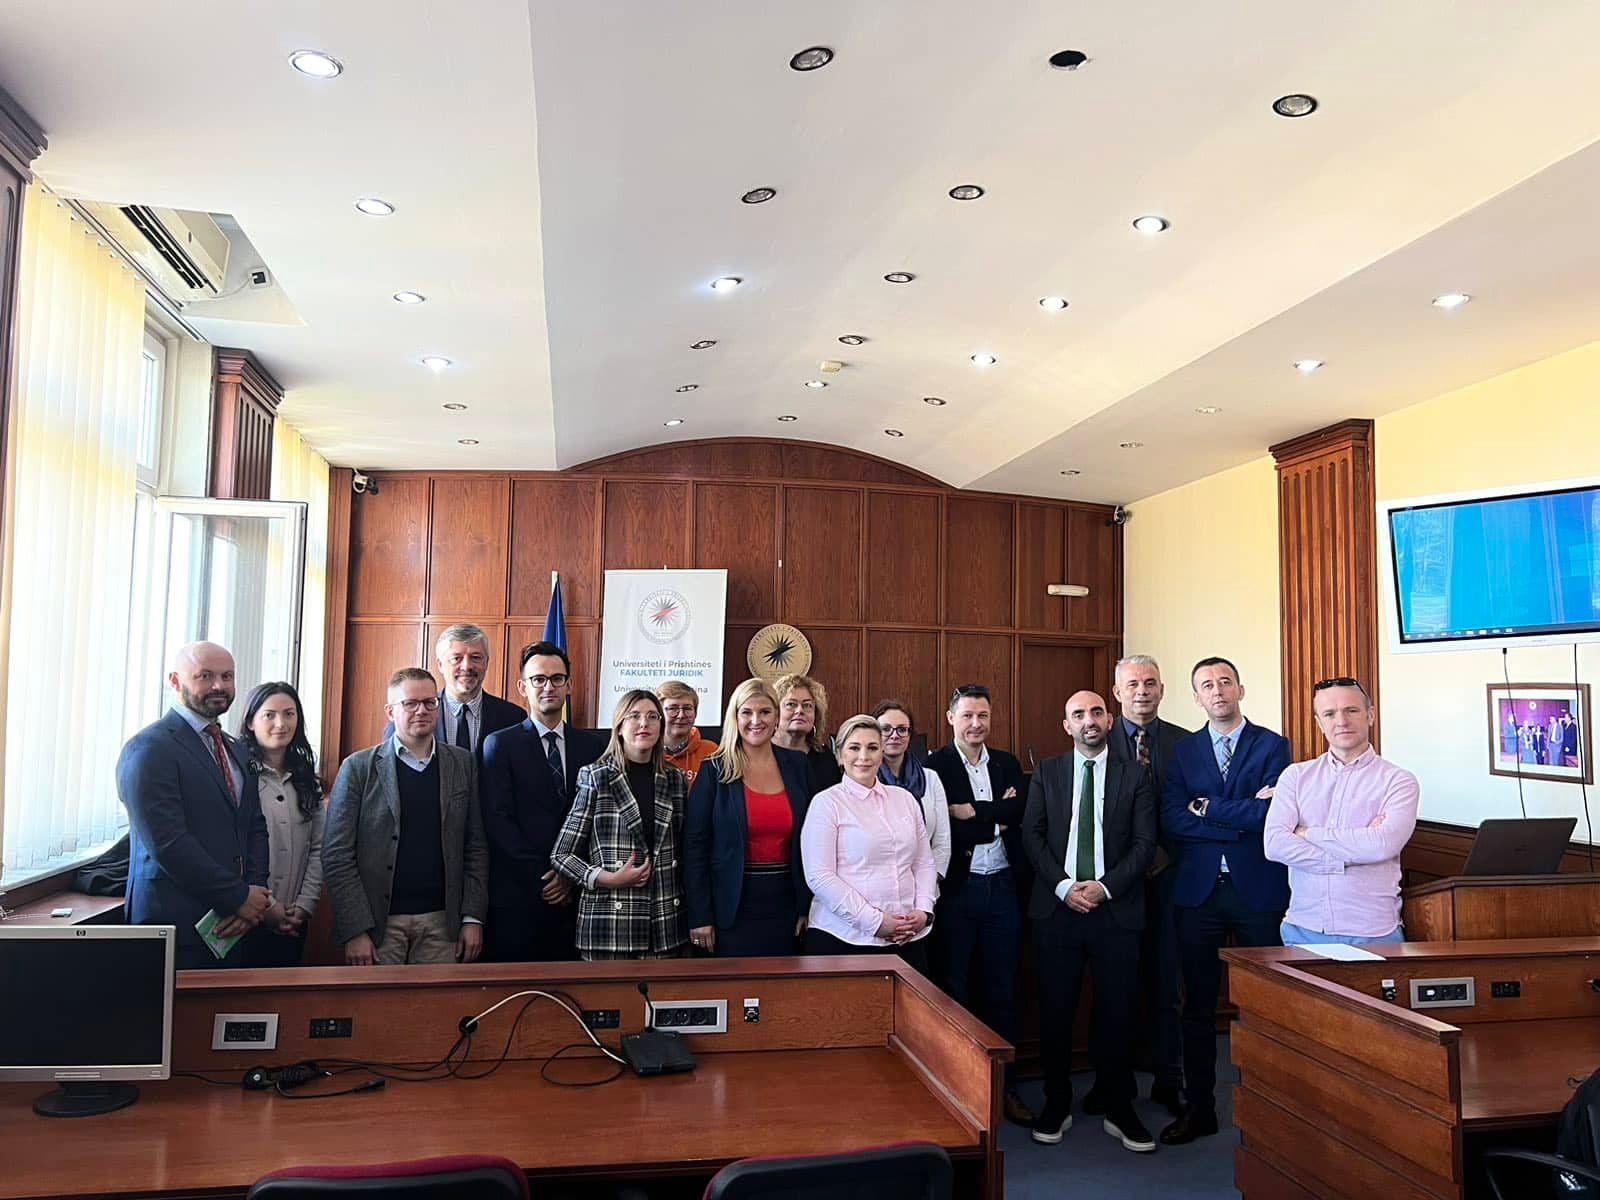 poland delegation visited prishtina university